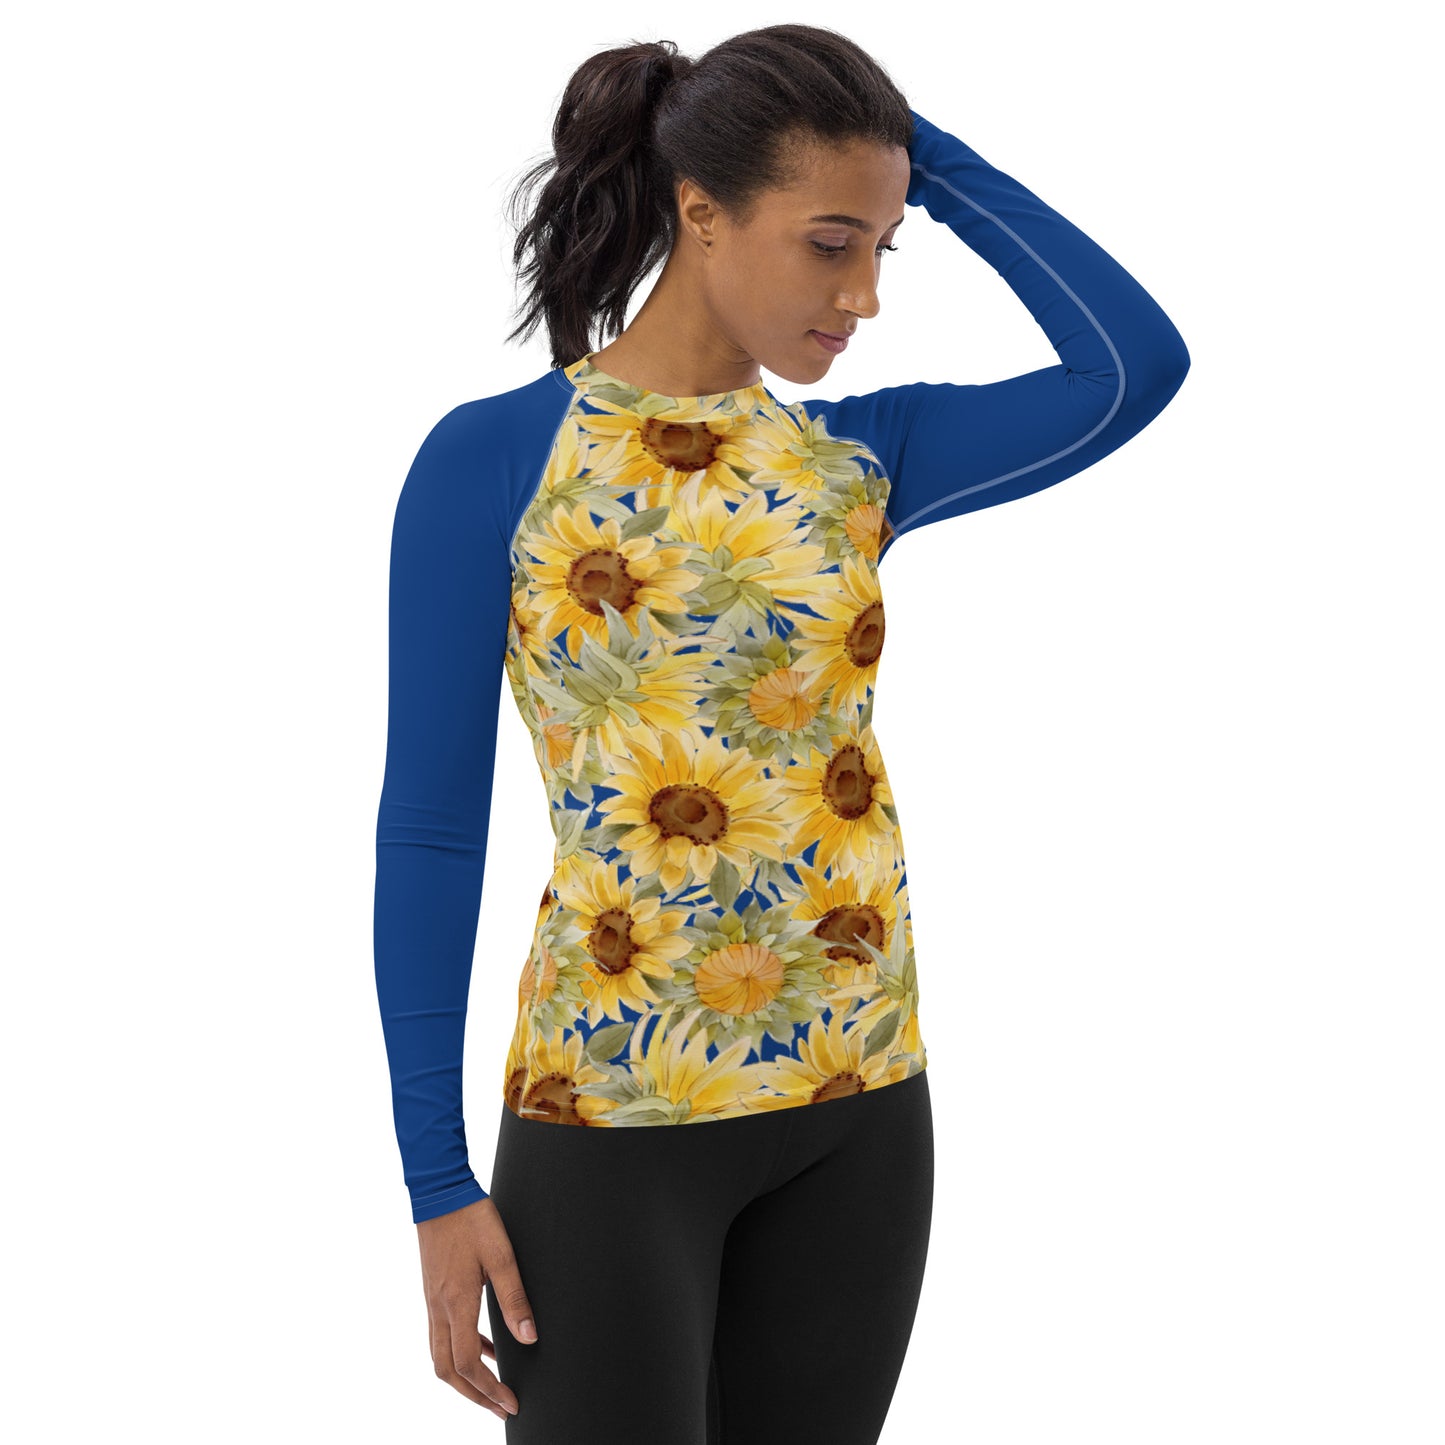 Women's All Over Print- Sunflowers - Lightweight Long Sleeve Performance Shirt - 50+ UV Protection - Moisture Wicking